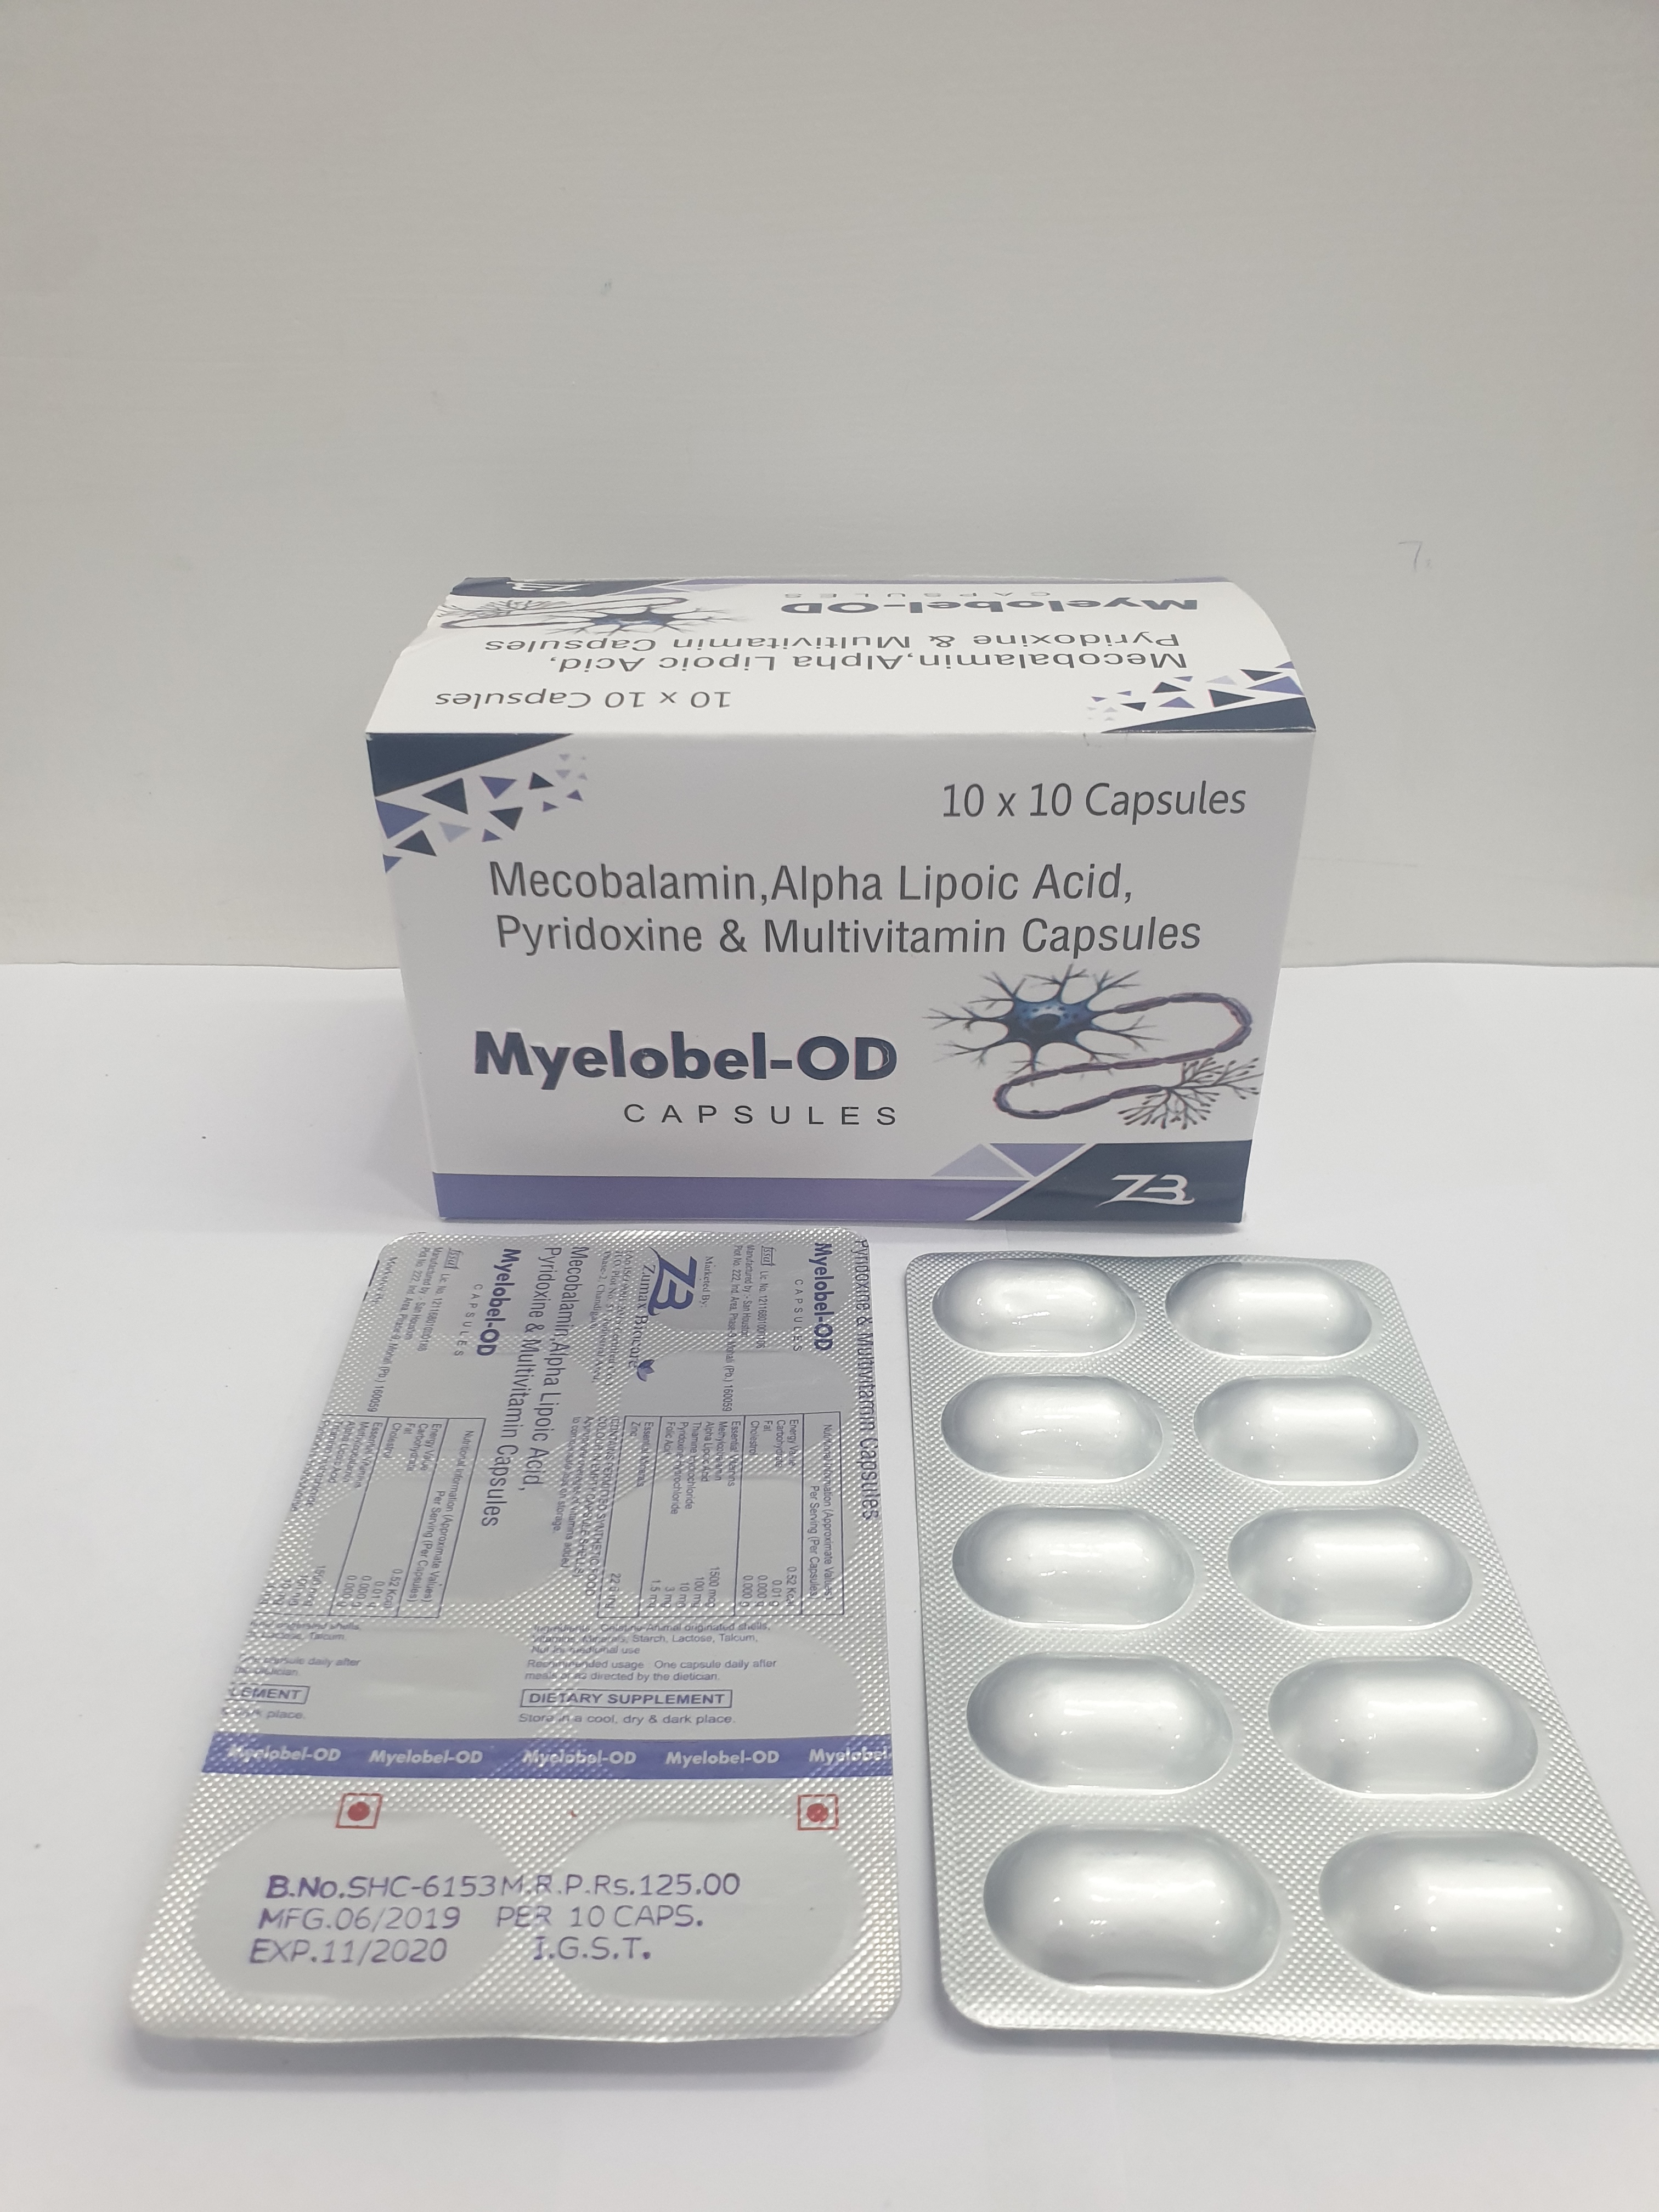 Product Name: Myelobel OD, Compositions of Myelobel OD are Mecobalamin, Alpha Lipoi Acid, Pyridoxine & Multivitamin Capsules - Zumax Biocare